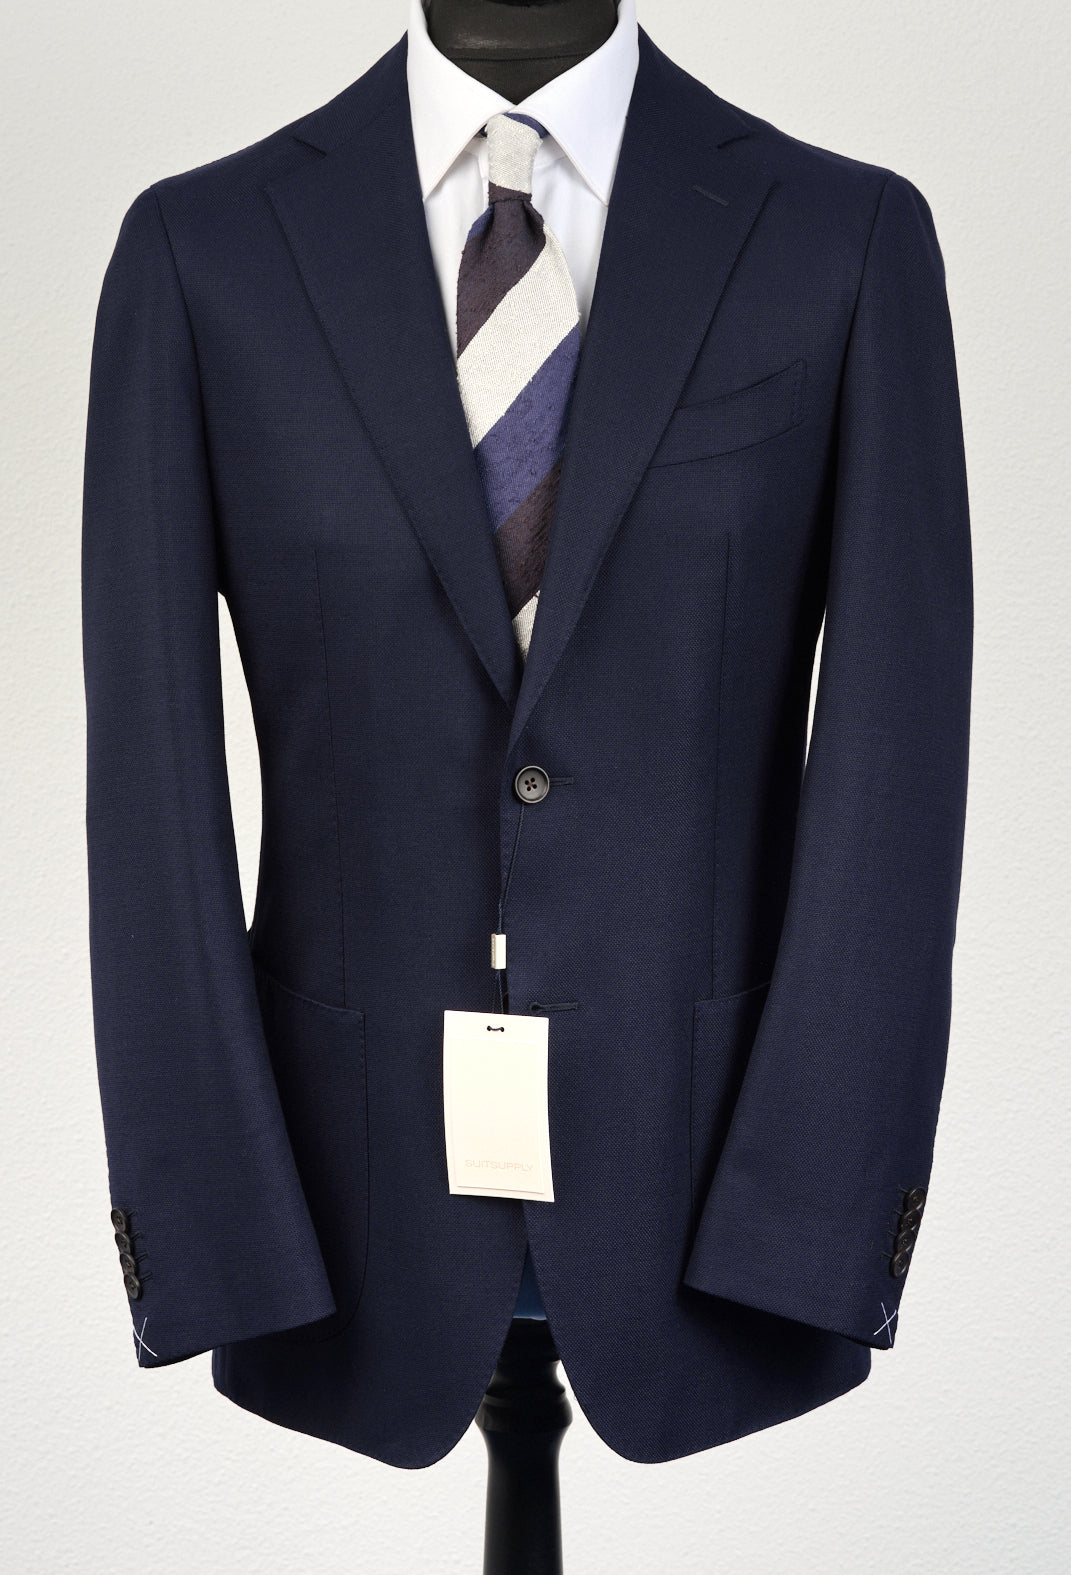 New Suitsupply Havana Navy Blue Wool Stretch Unlined Blazer - Size 40R